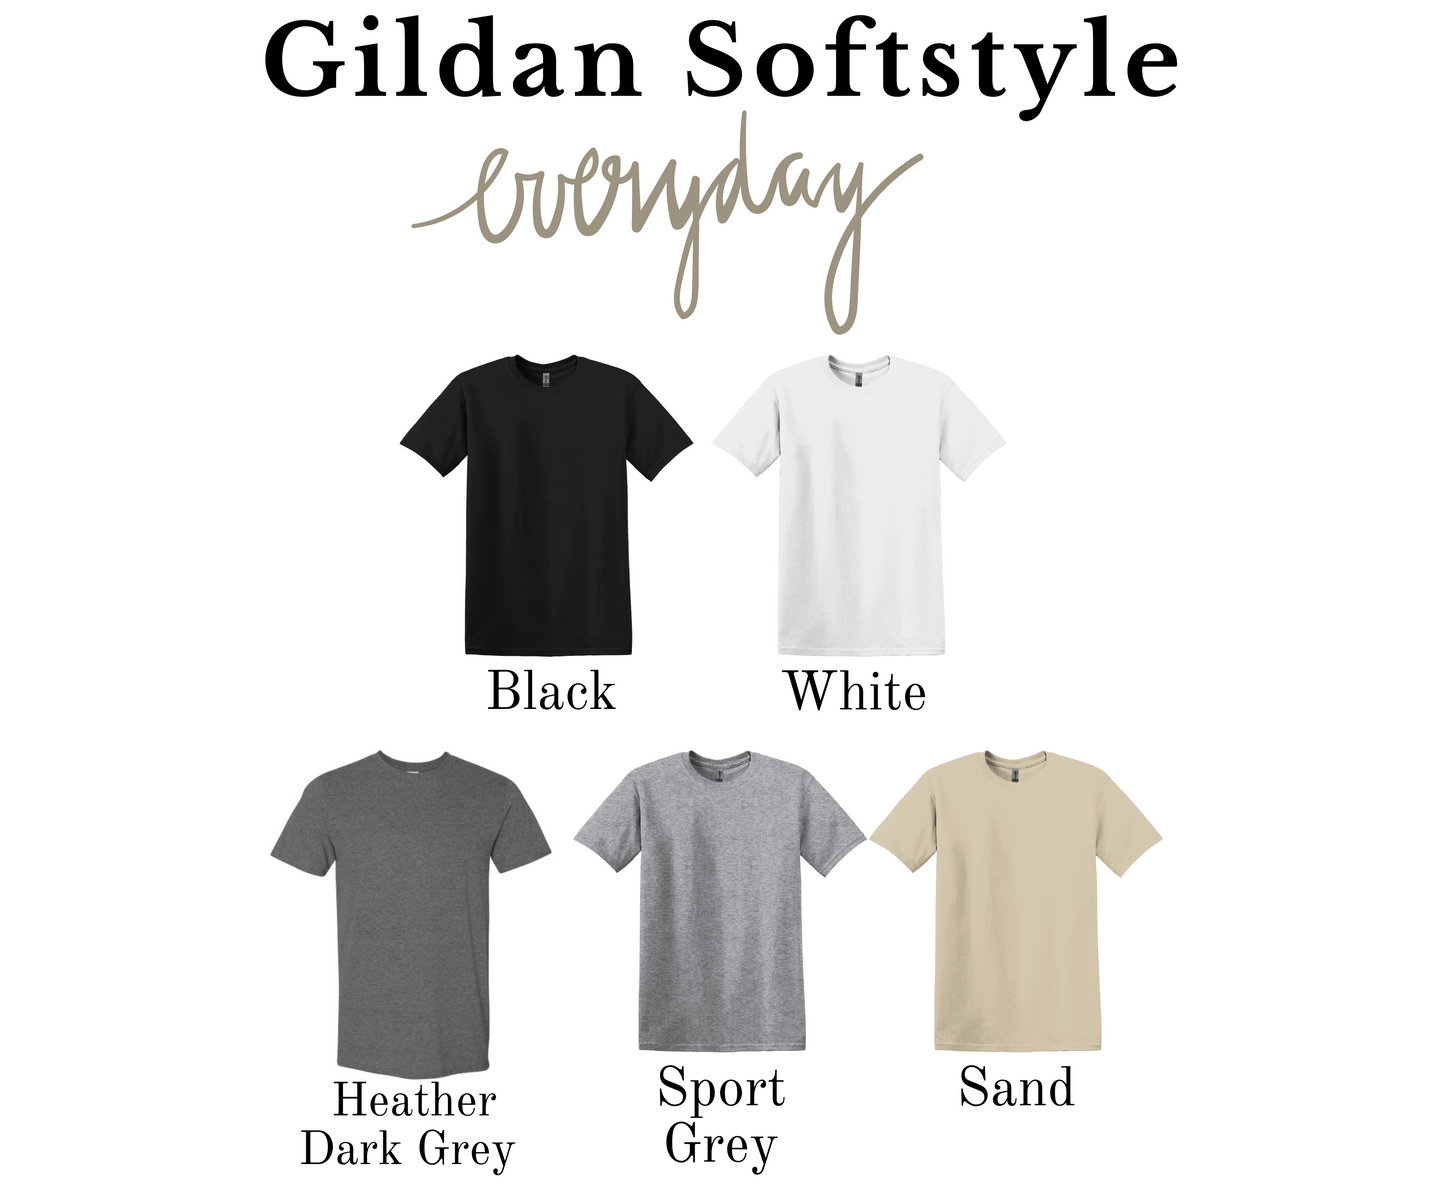 Preppy Tigers Gildan Softstyle Sweatshirt or T-shirt